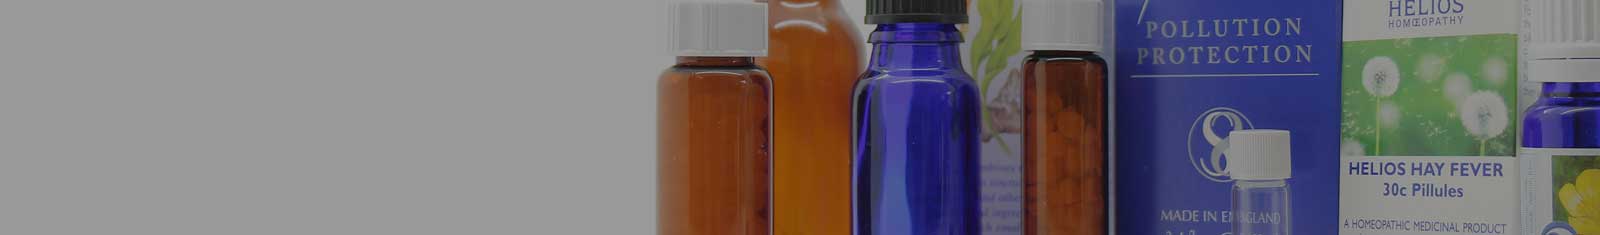 Homeopathy Supplies